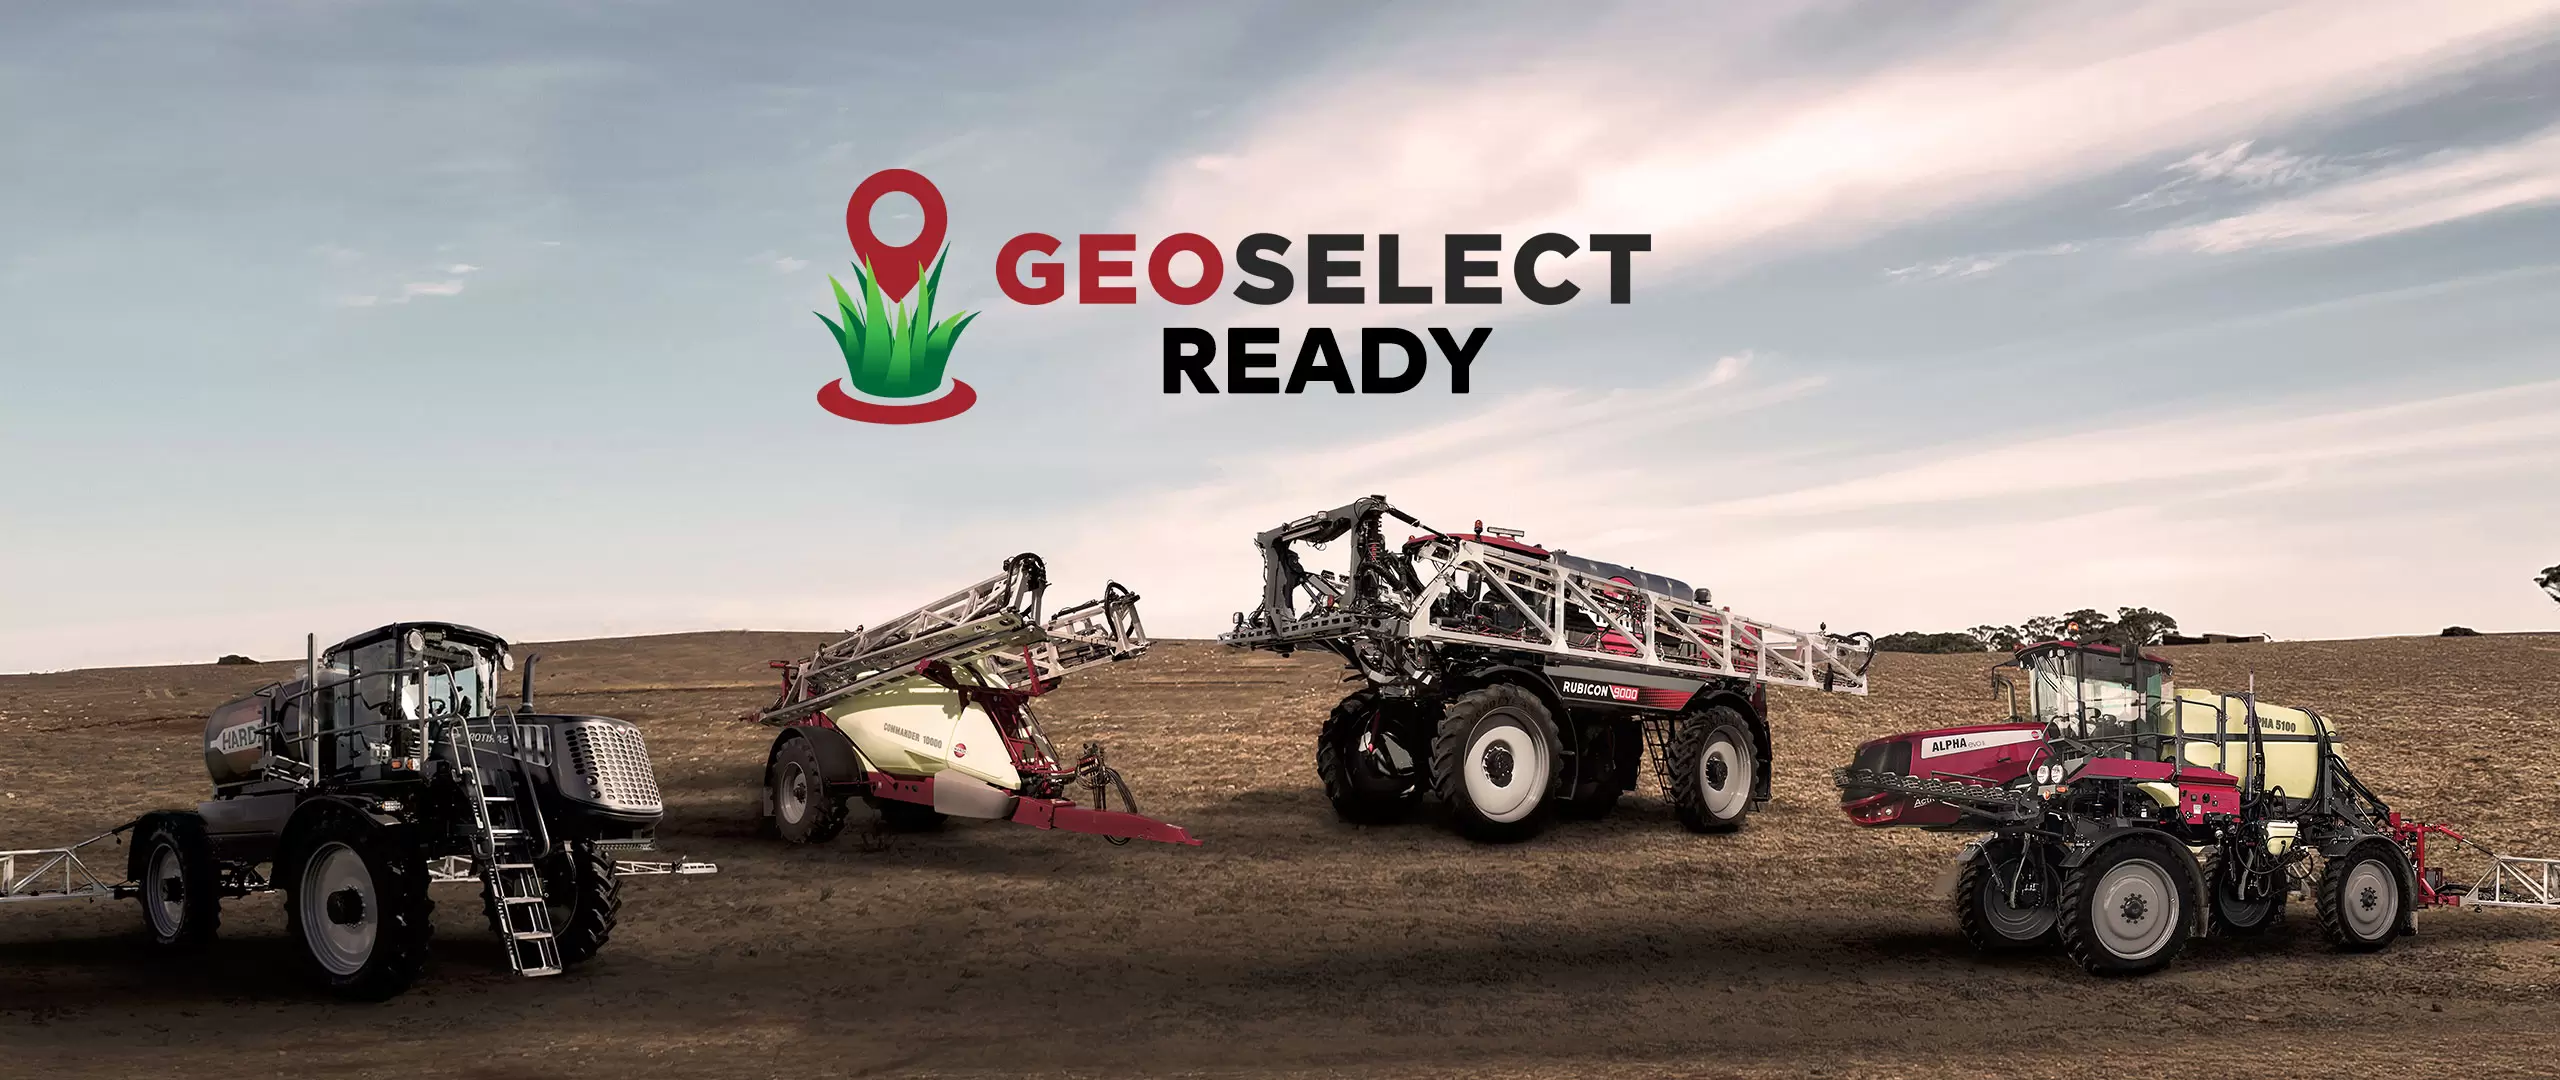 GeoSelect Ready Machines